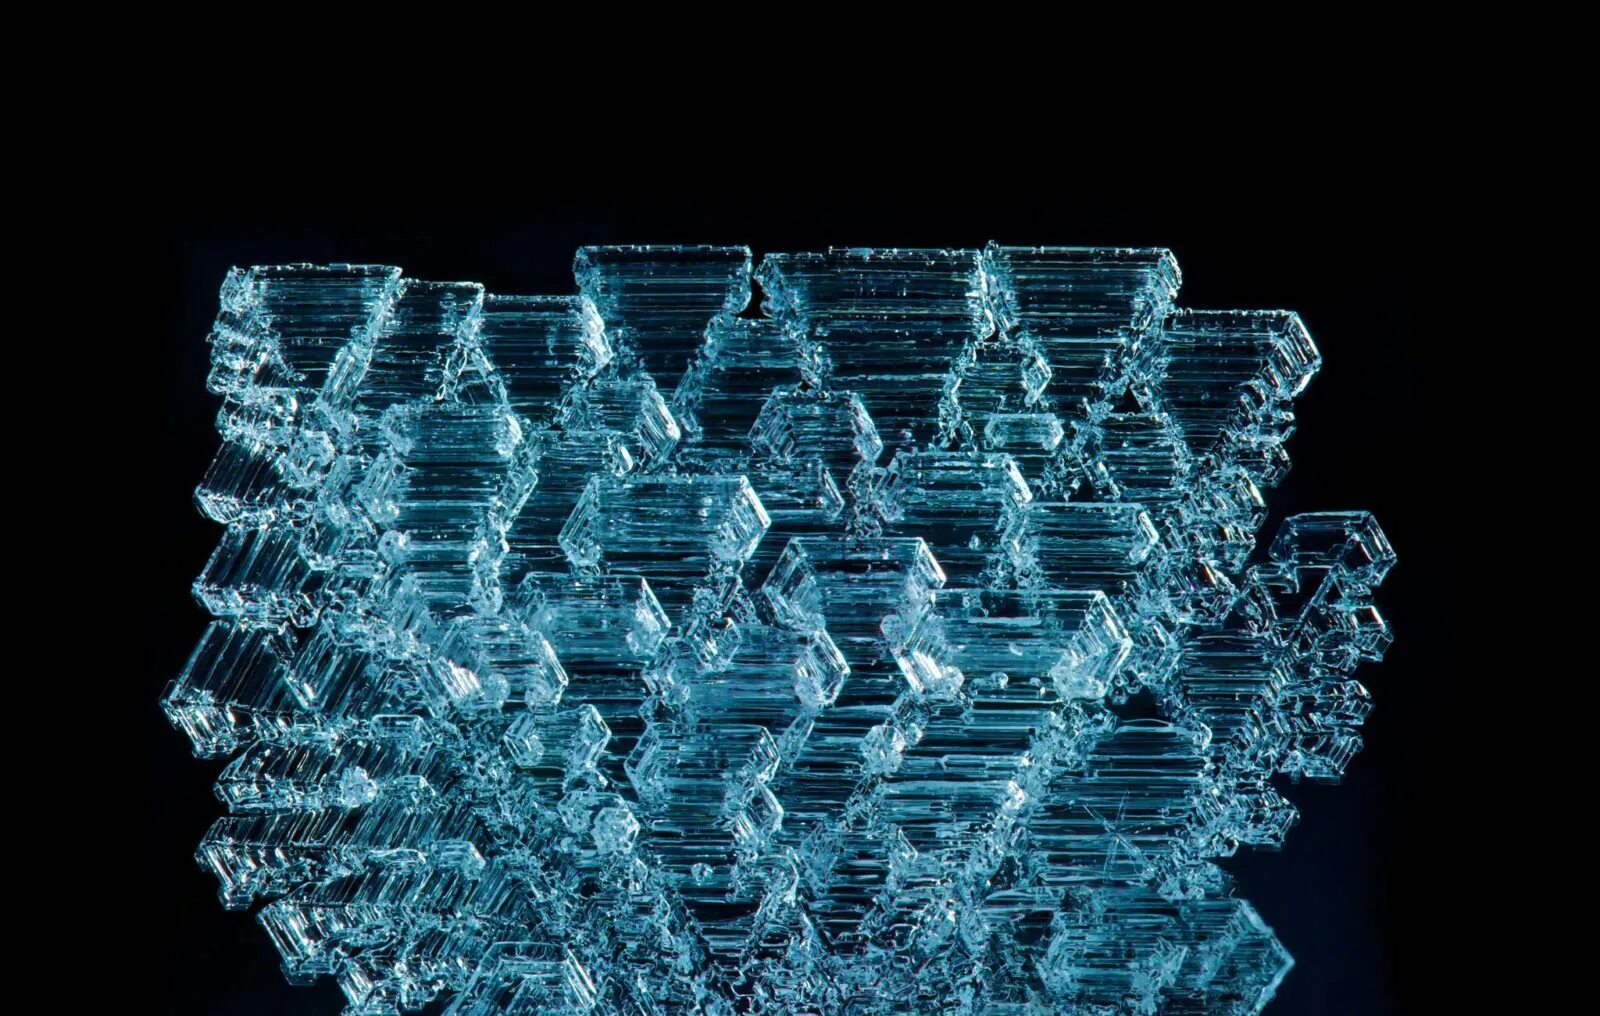 Кристаллы под микроскопом. Лед под микроскопом. Кристаллы льда под микроскопом. Кристаллики льда под микроскопом. Кристаллическая волна